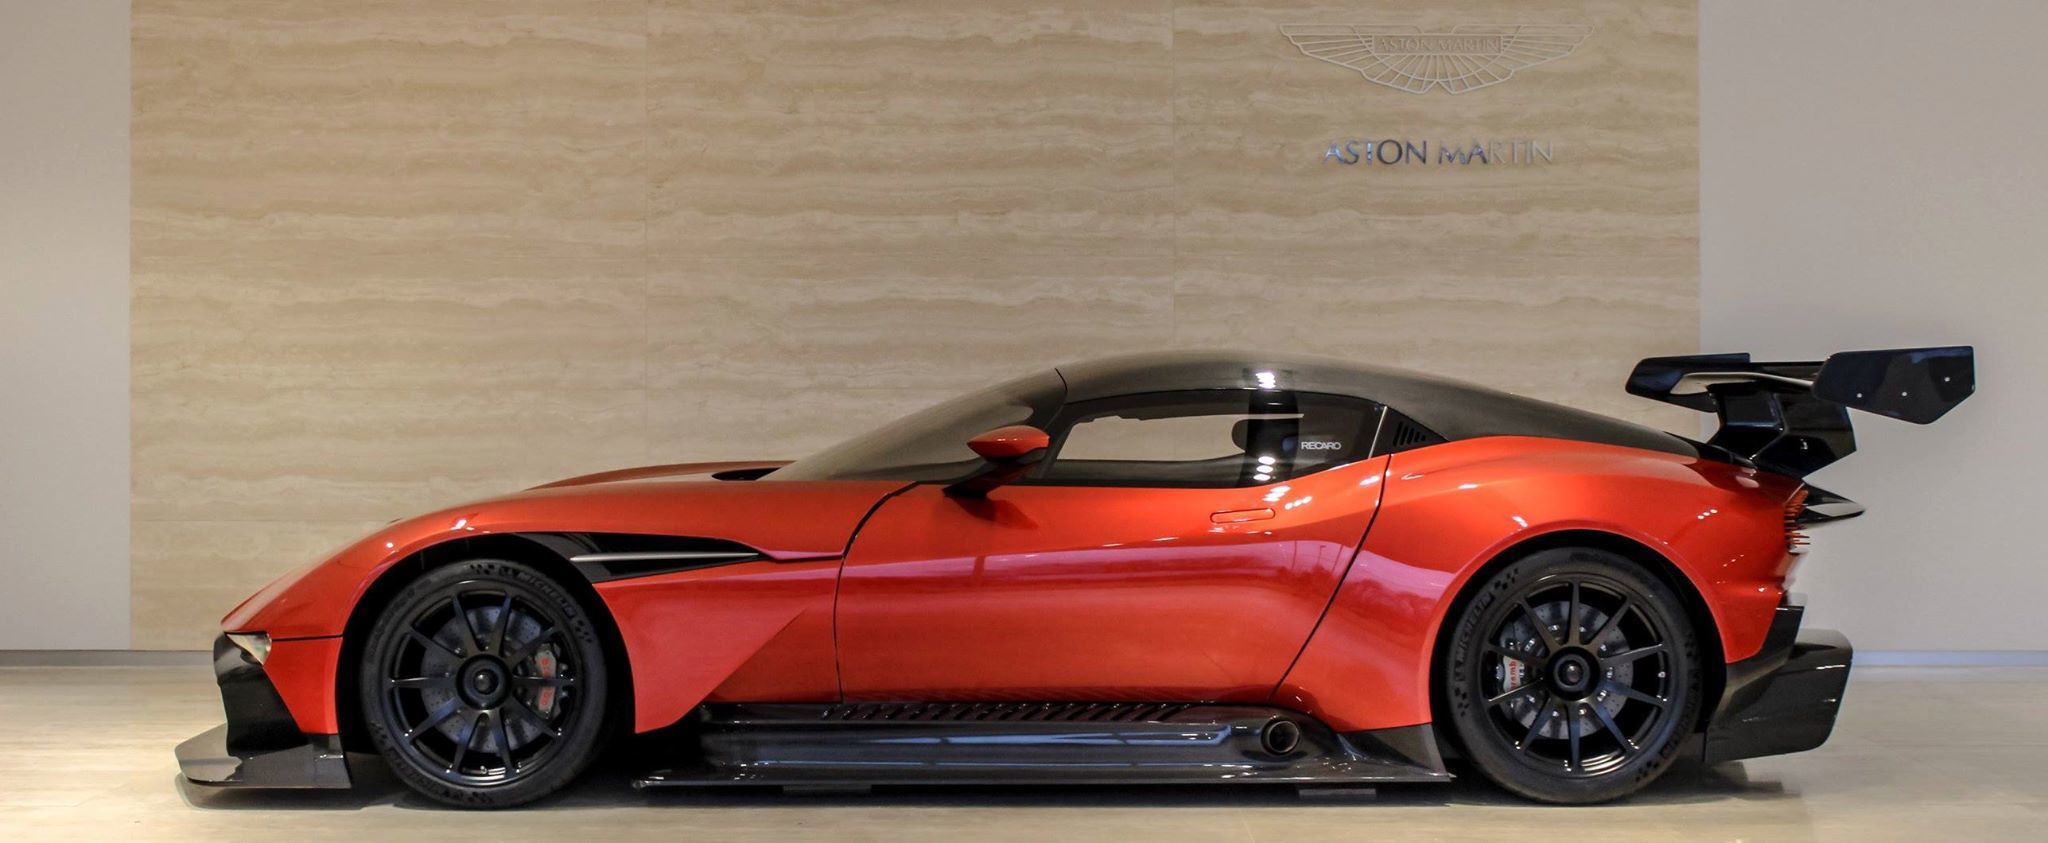 Aston Martin Vulcan Picture